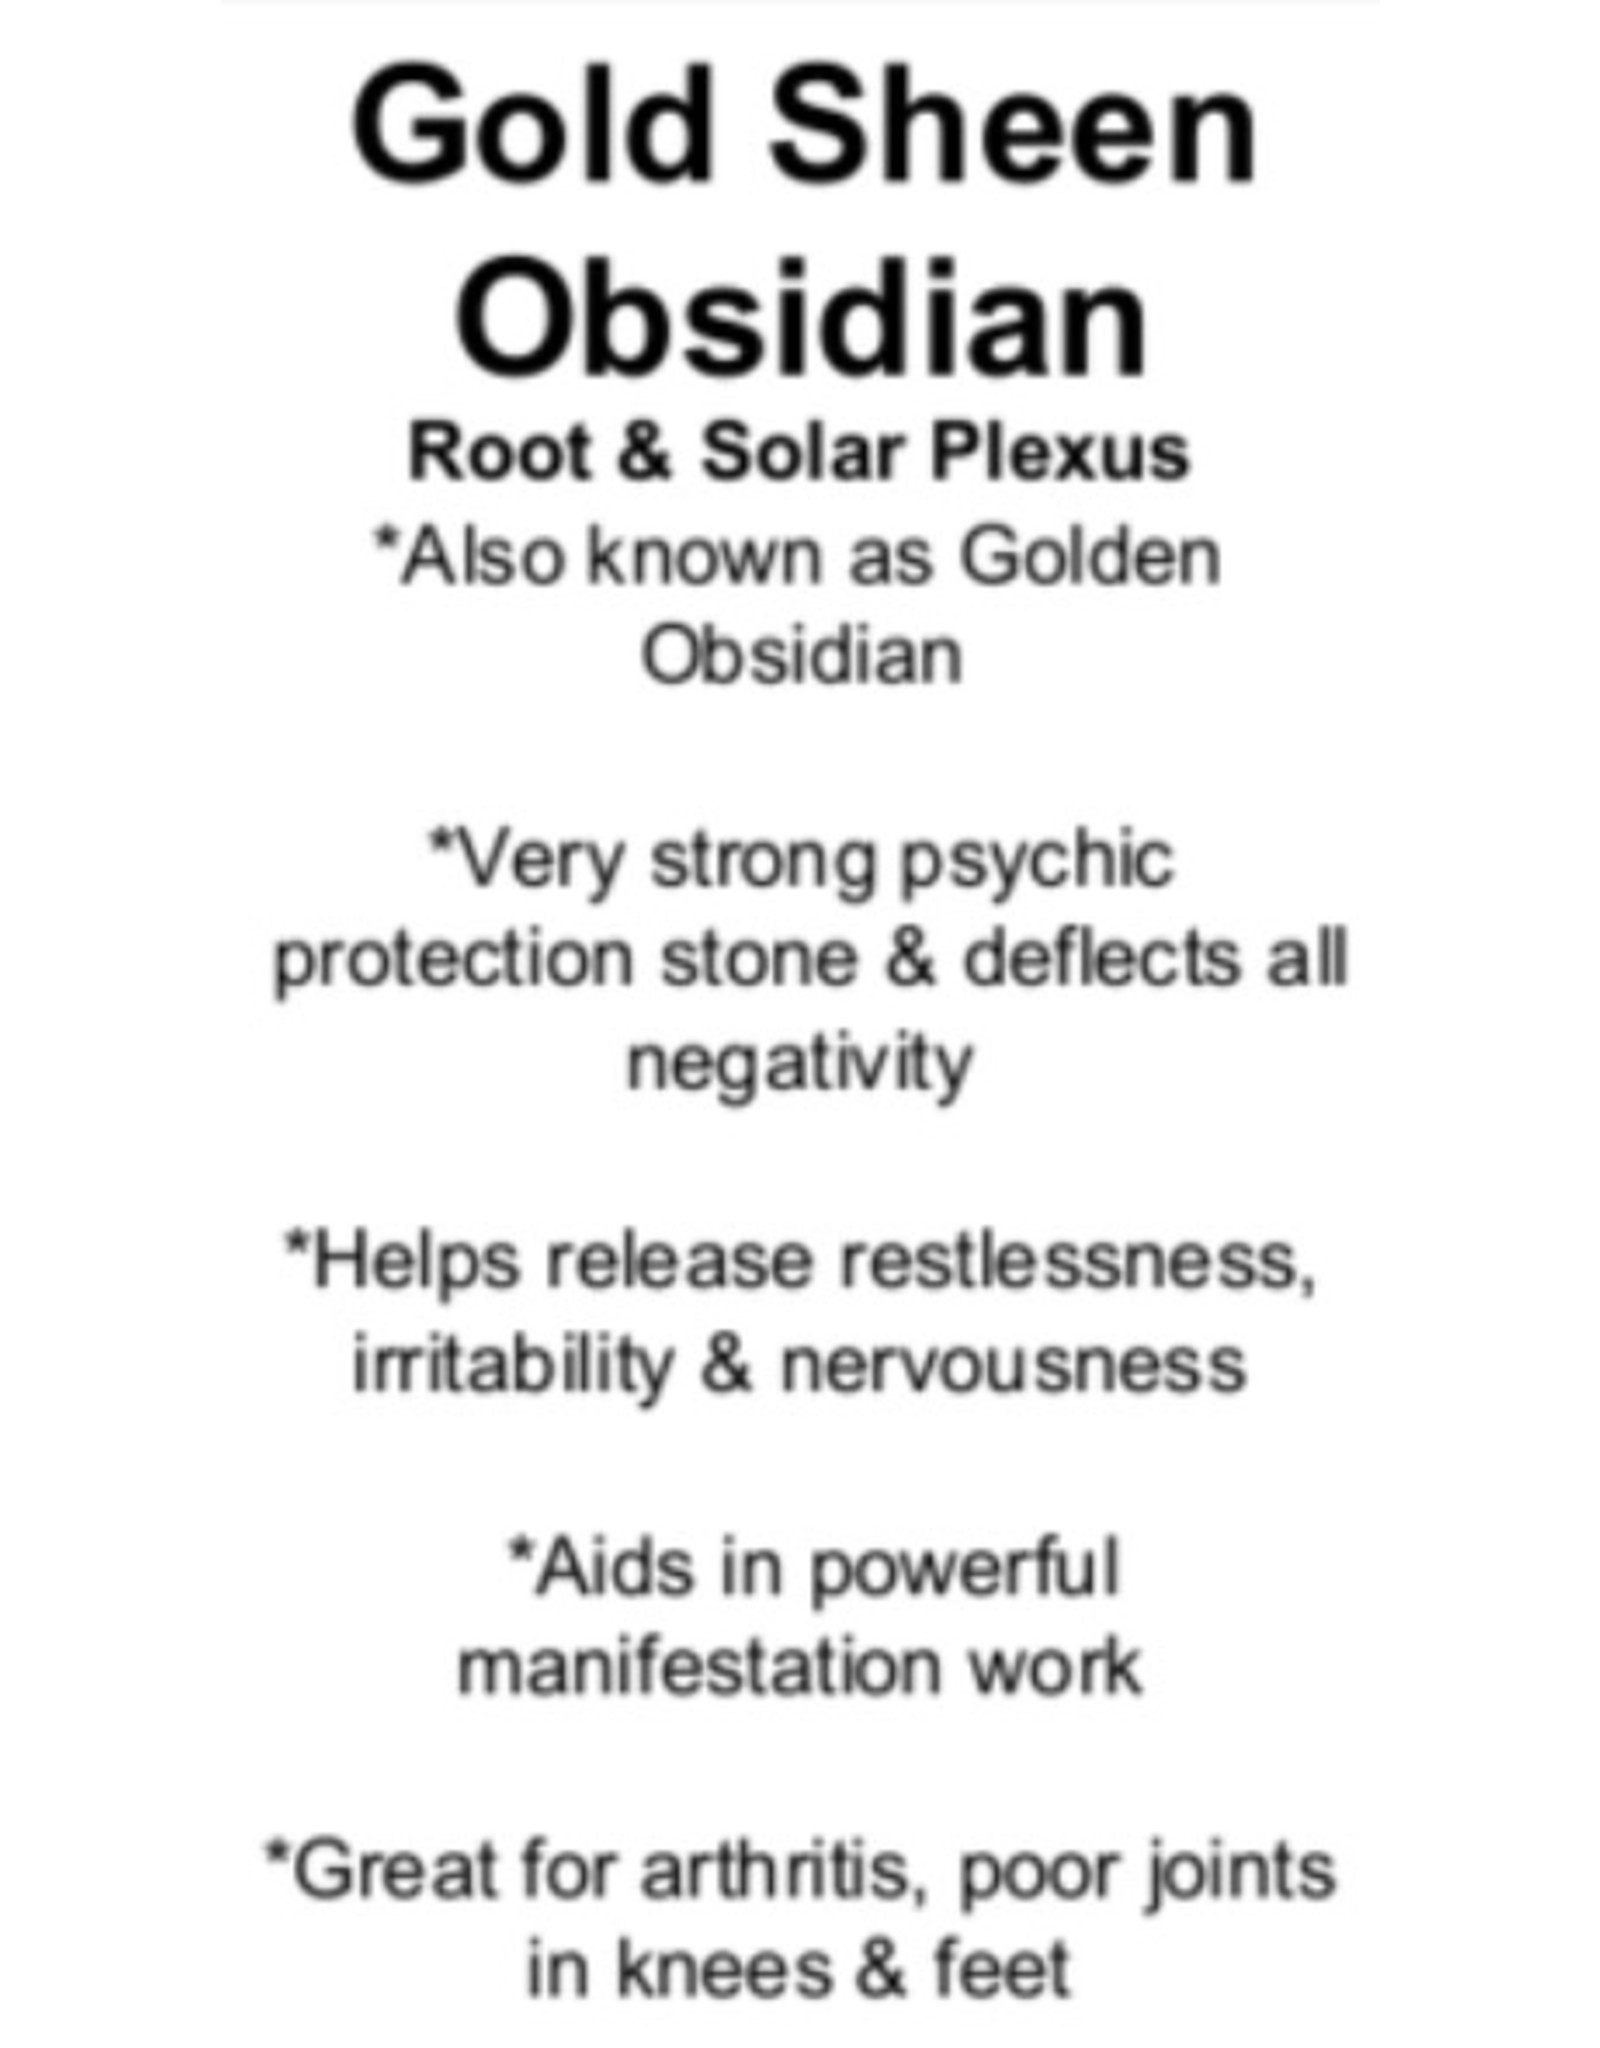 golden sheen obsidian properties